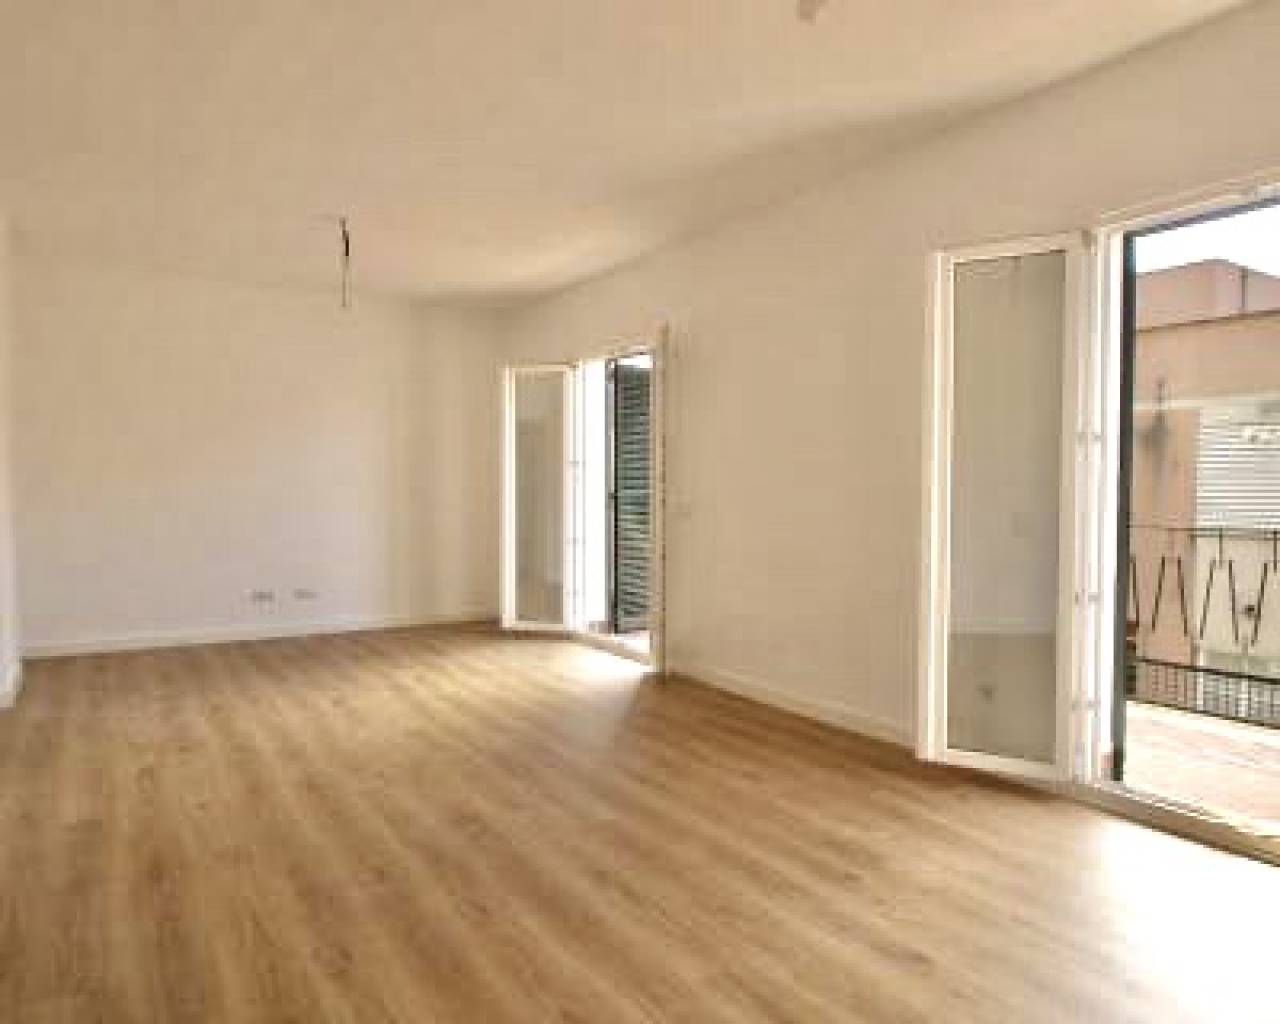 3 Bedroom Apartment in Santa Catalina for Rent-Mallorca Estate agents